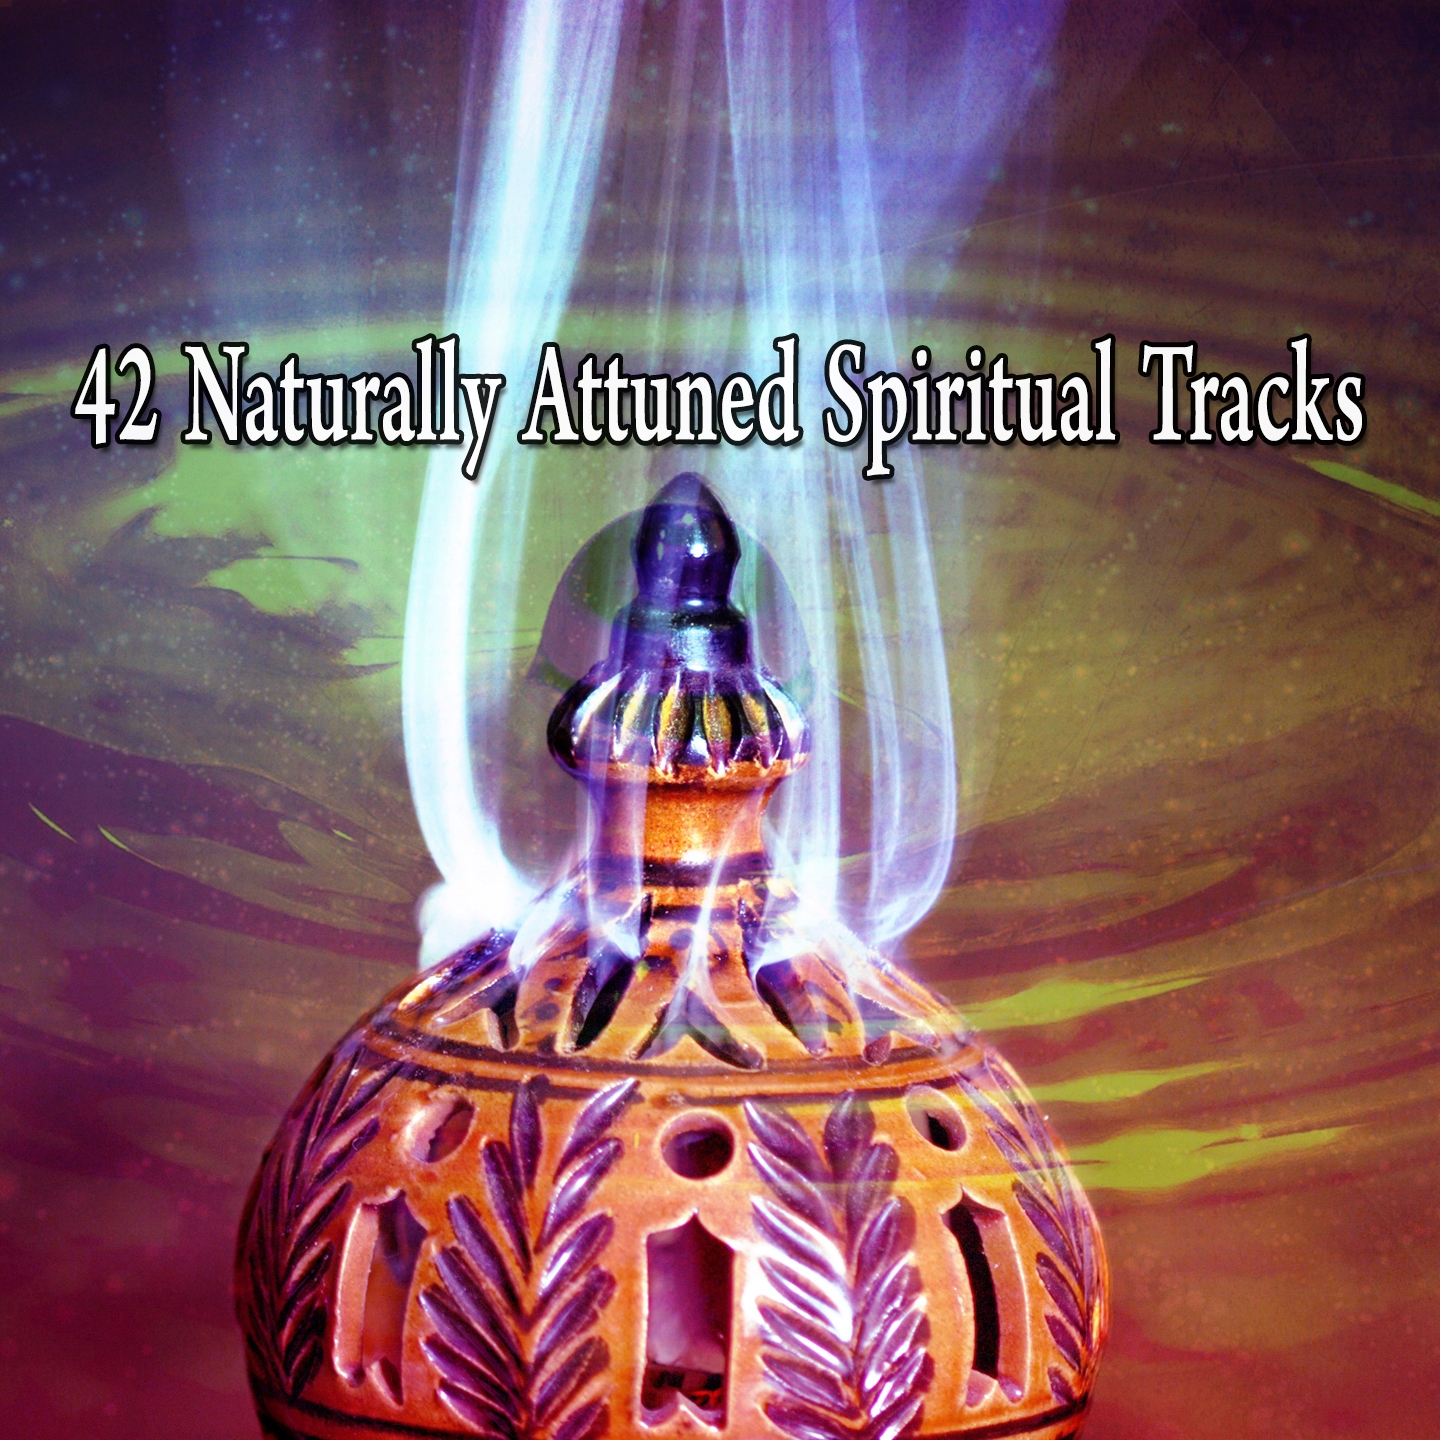 42 Naturally Attuned Spiritual Tracks